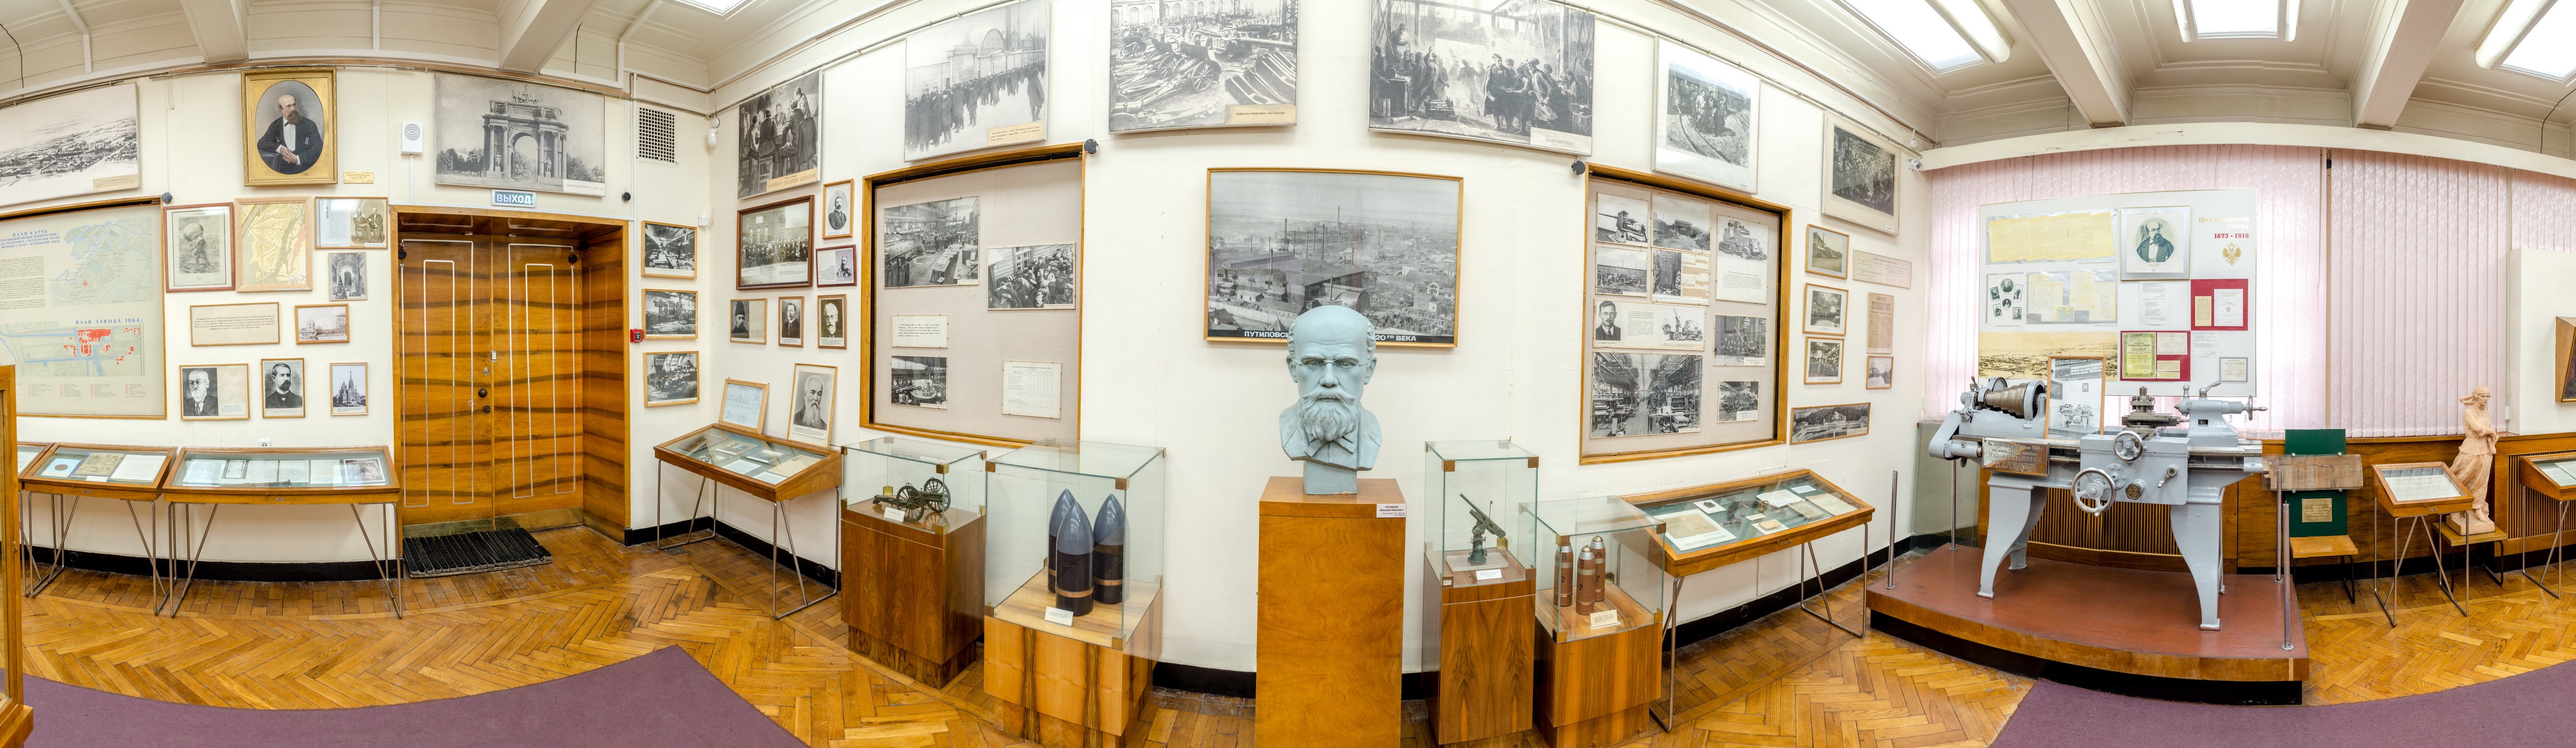 Музей истории и техники ОАО «Кировский завод» – афиша